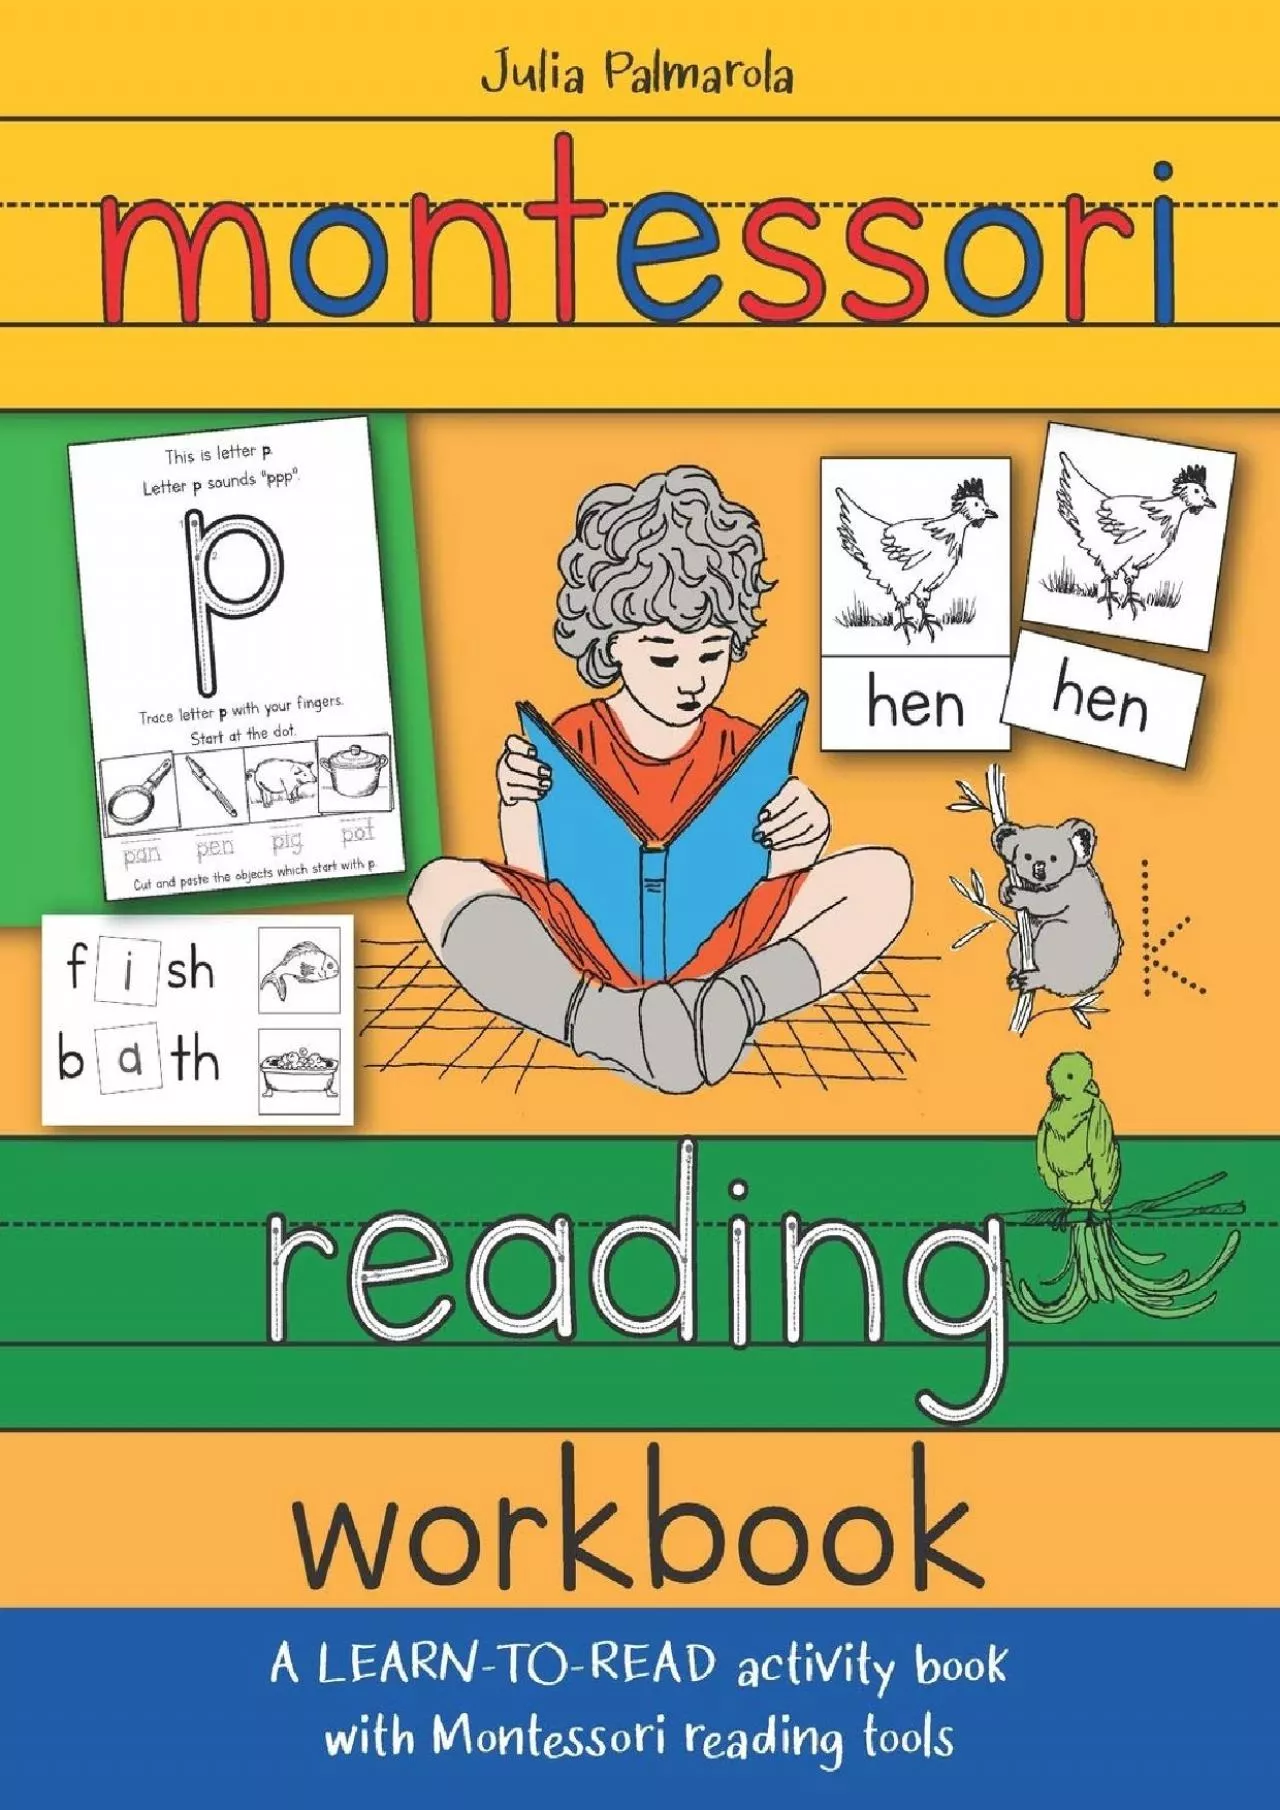 [EBOOK] Montessori Reading Workbook: A LEARN TO READ activity book with Montessori reading